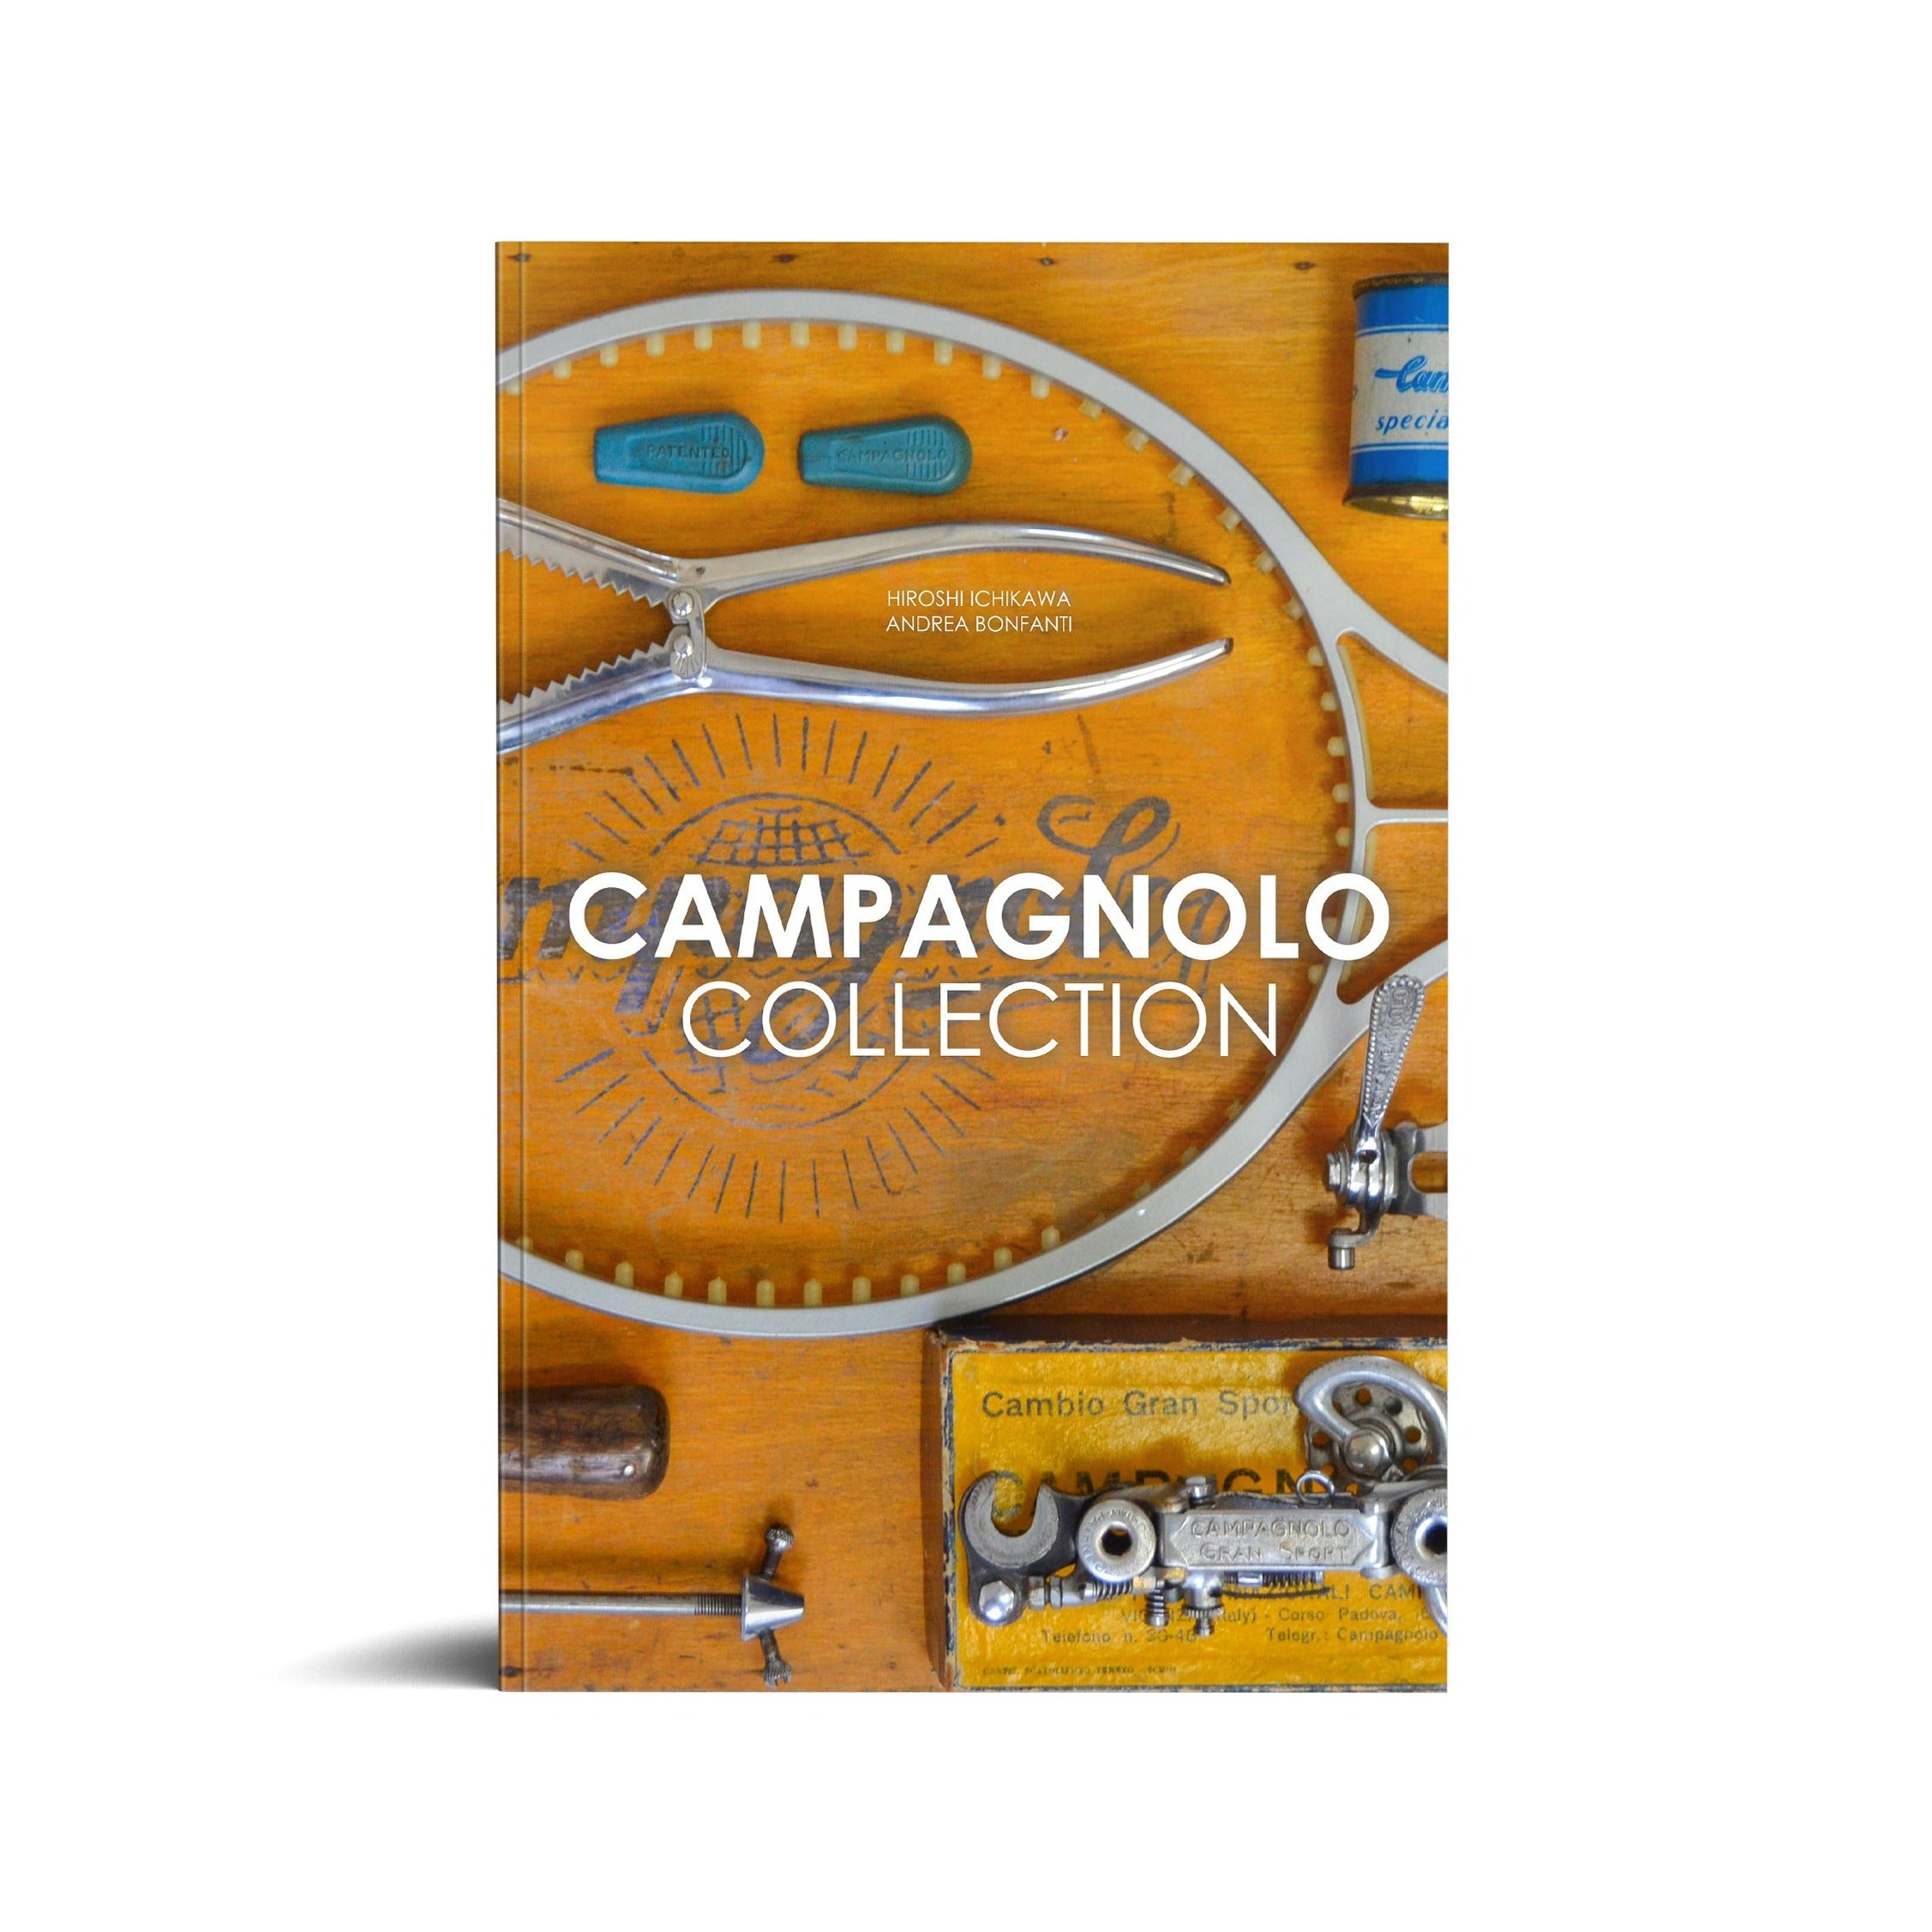 Campagnolo Collection – corsaclassic